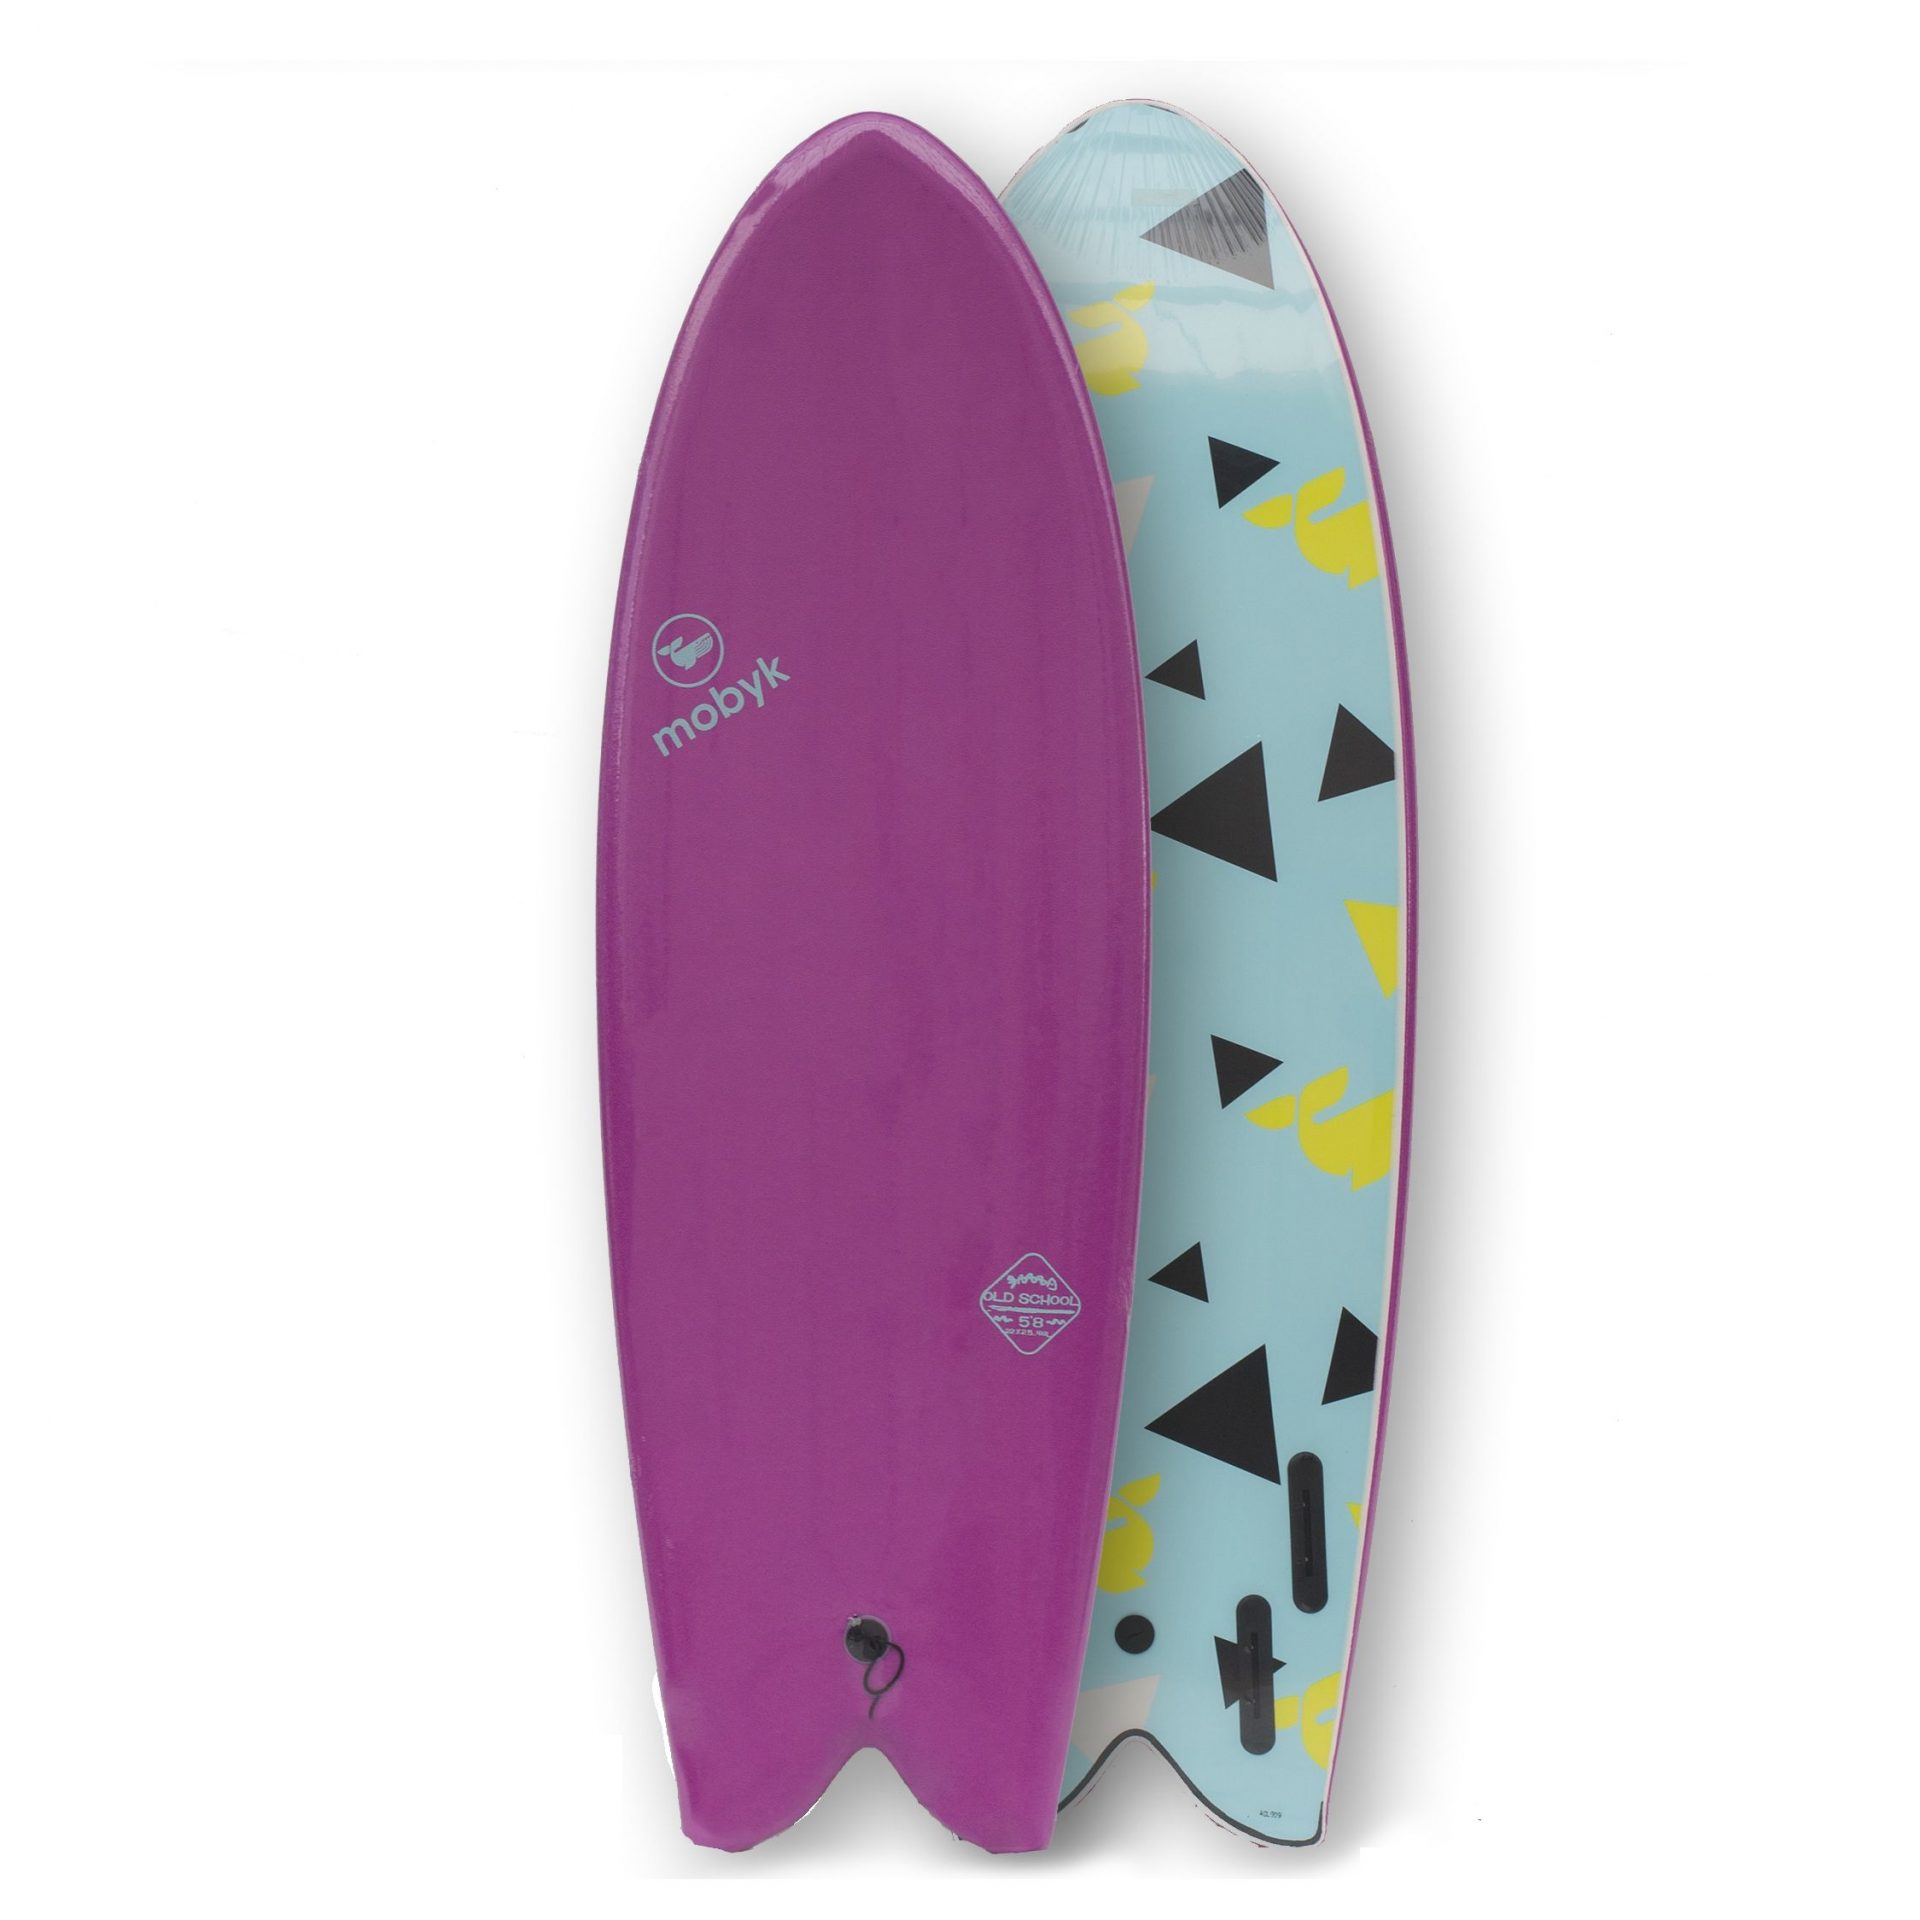 Mobyk surfboards 5´8 violet jade